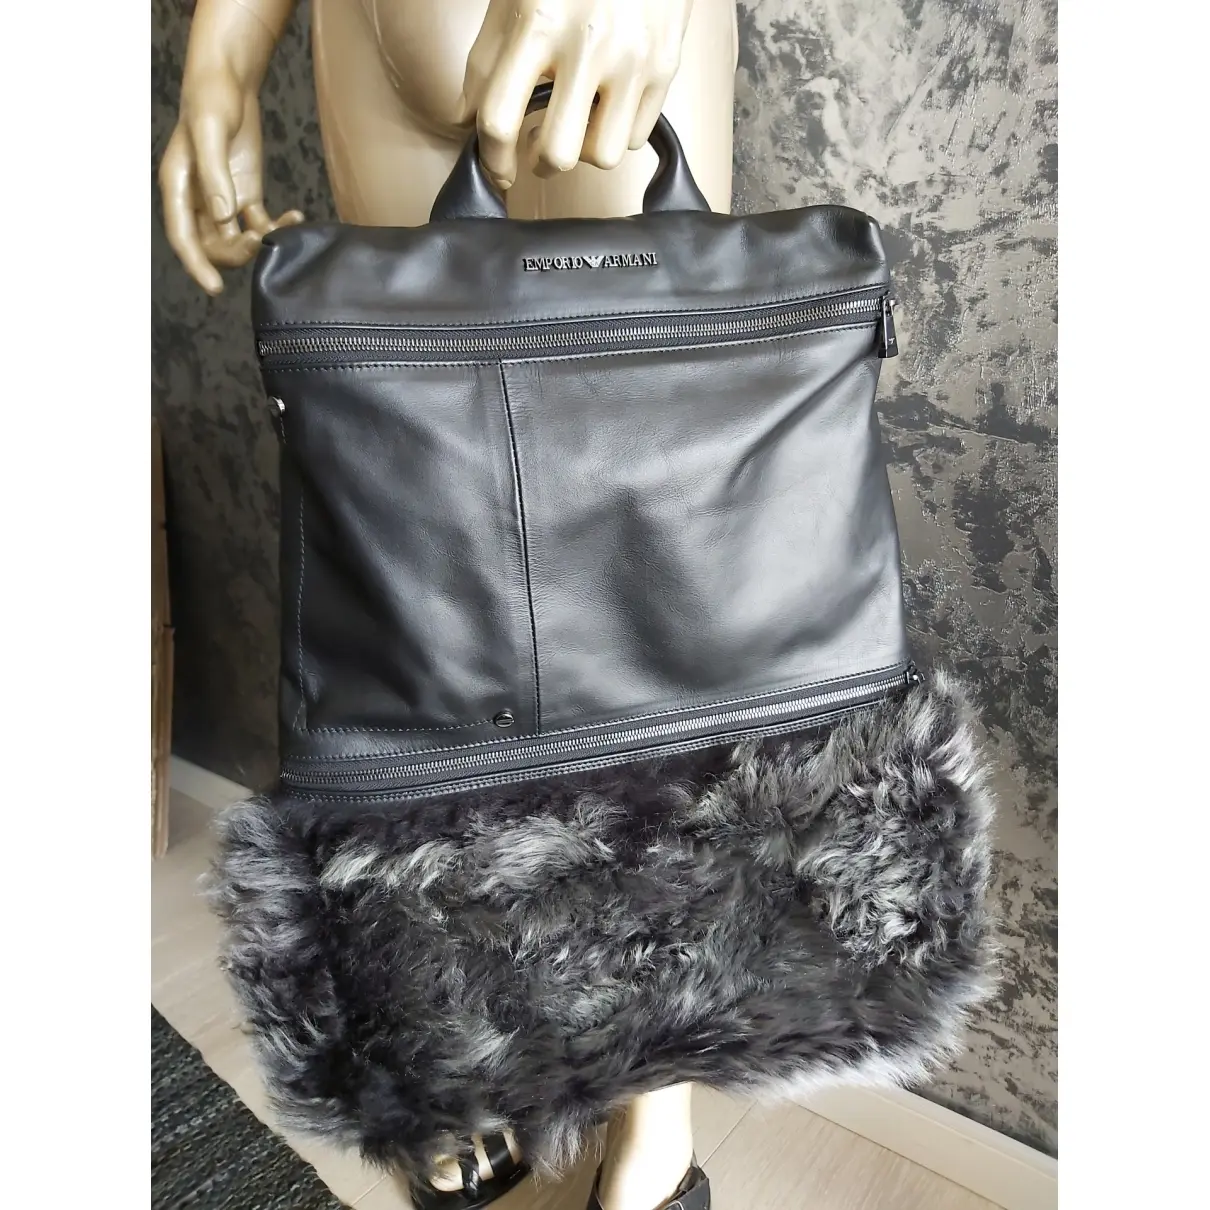 Buy Emporio Armani Leather travel bag online